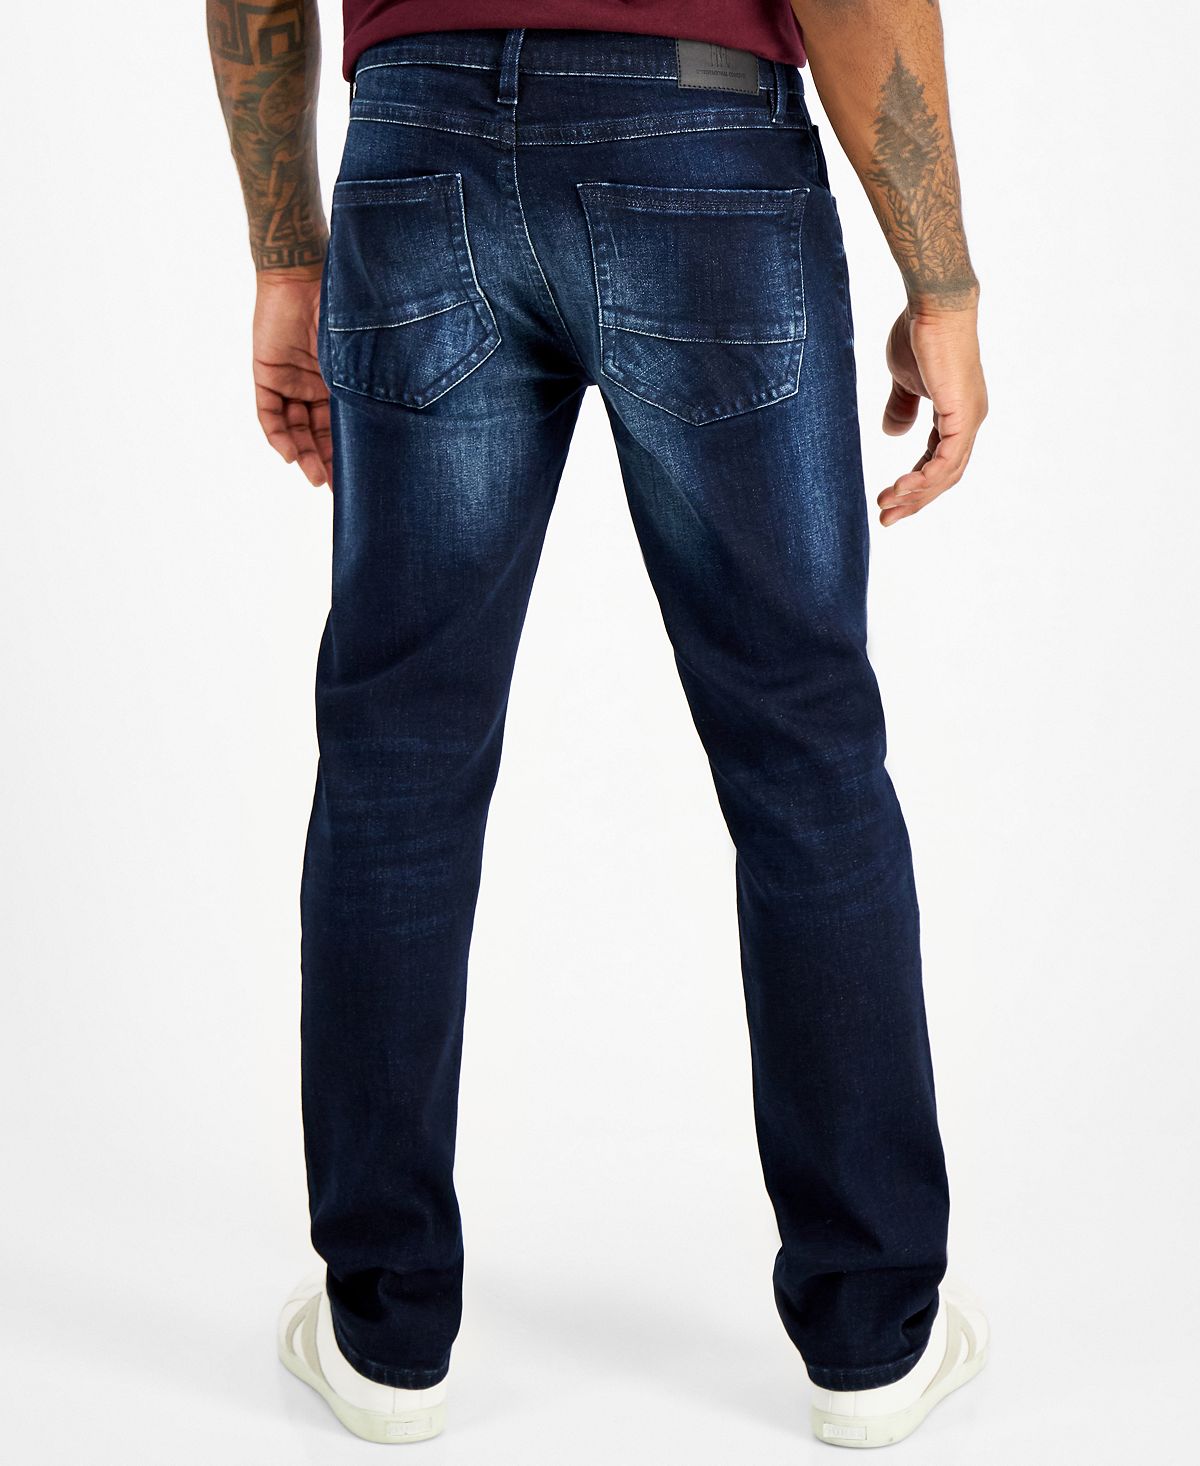 DENIM CORE BLUE Inc Black Jeans Waist 36 Regular Length Fit Cuff £29.99 -  PicClick UK